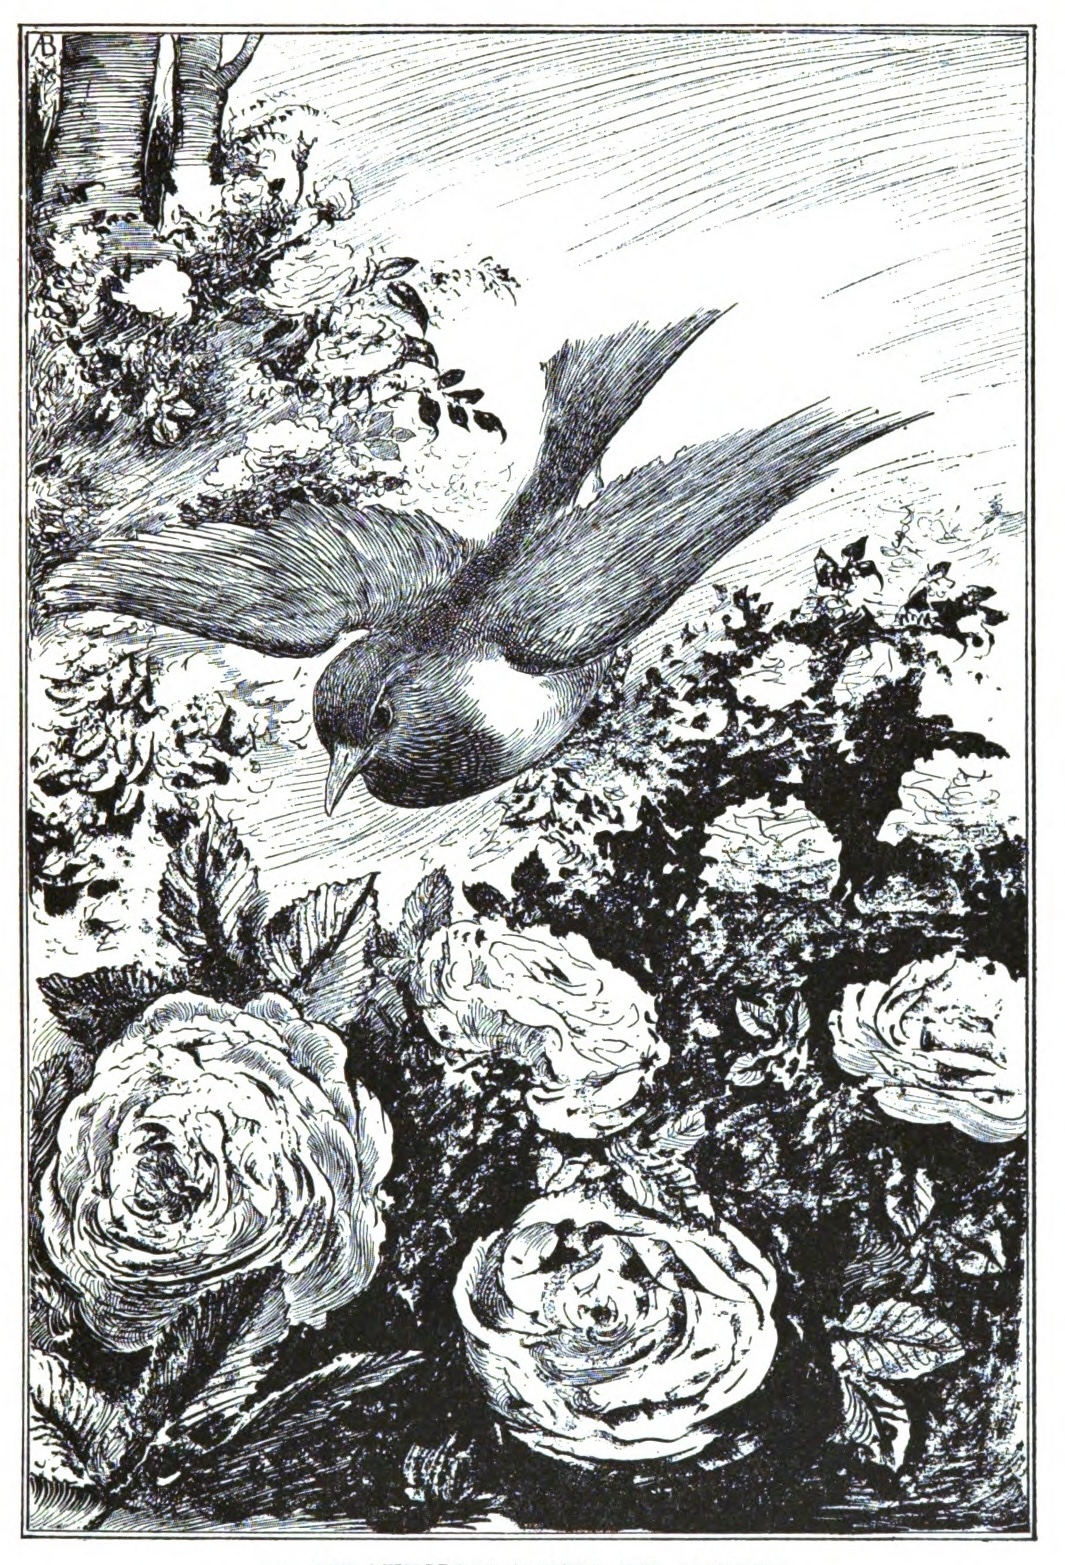 bird flying above rose bushes.